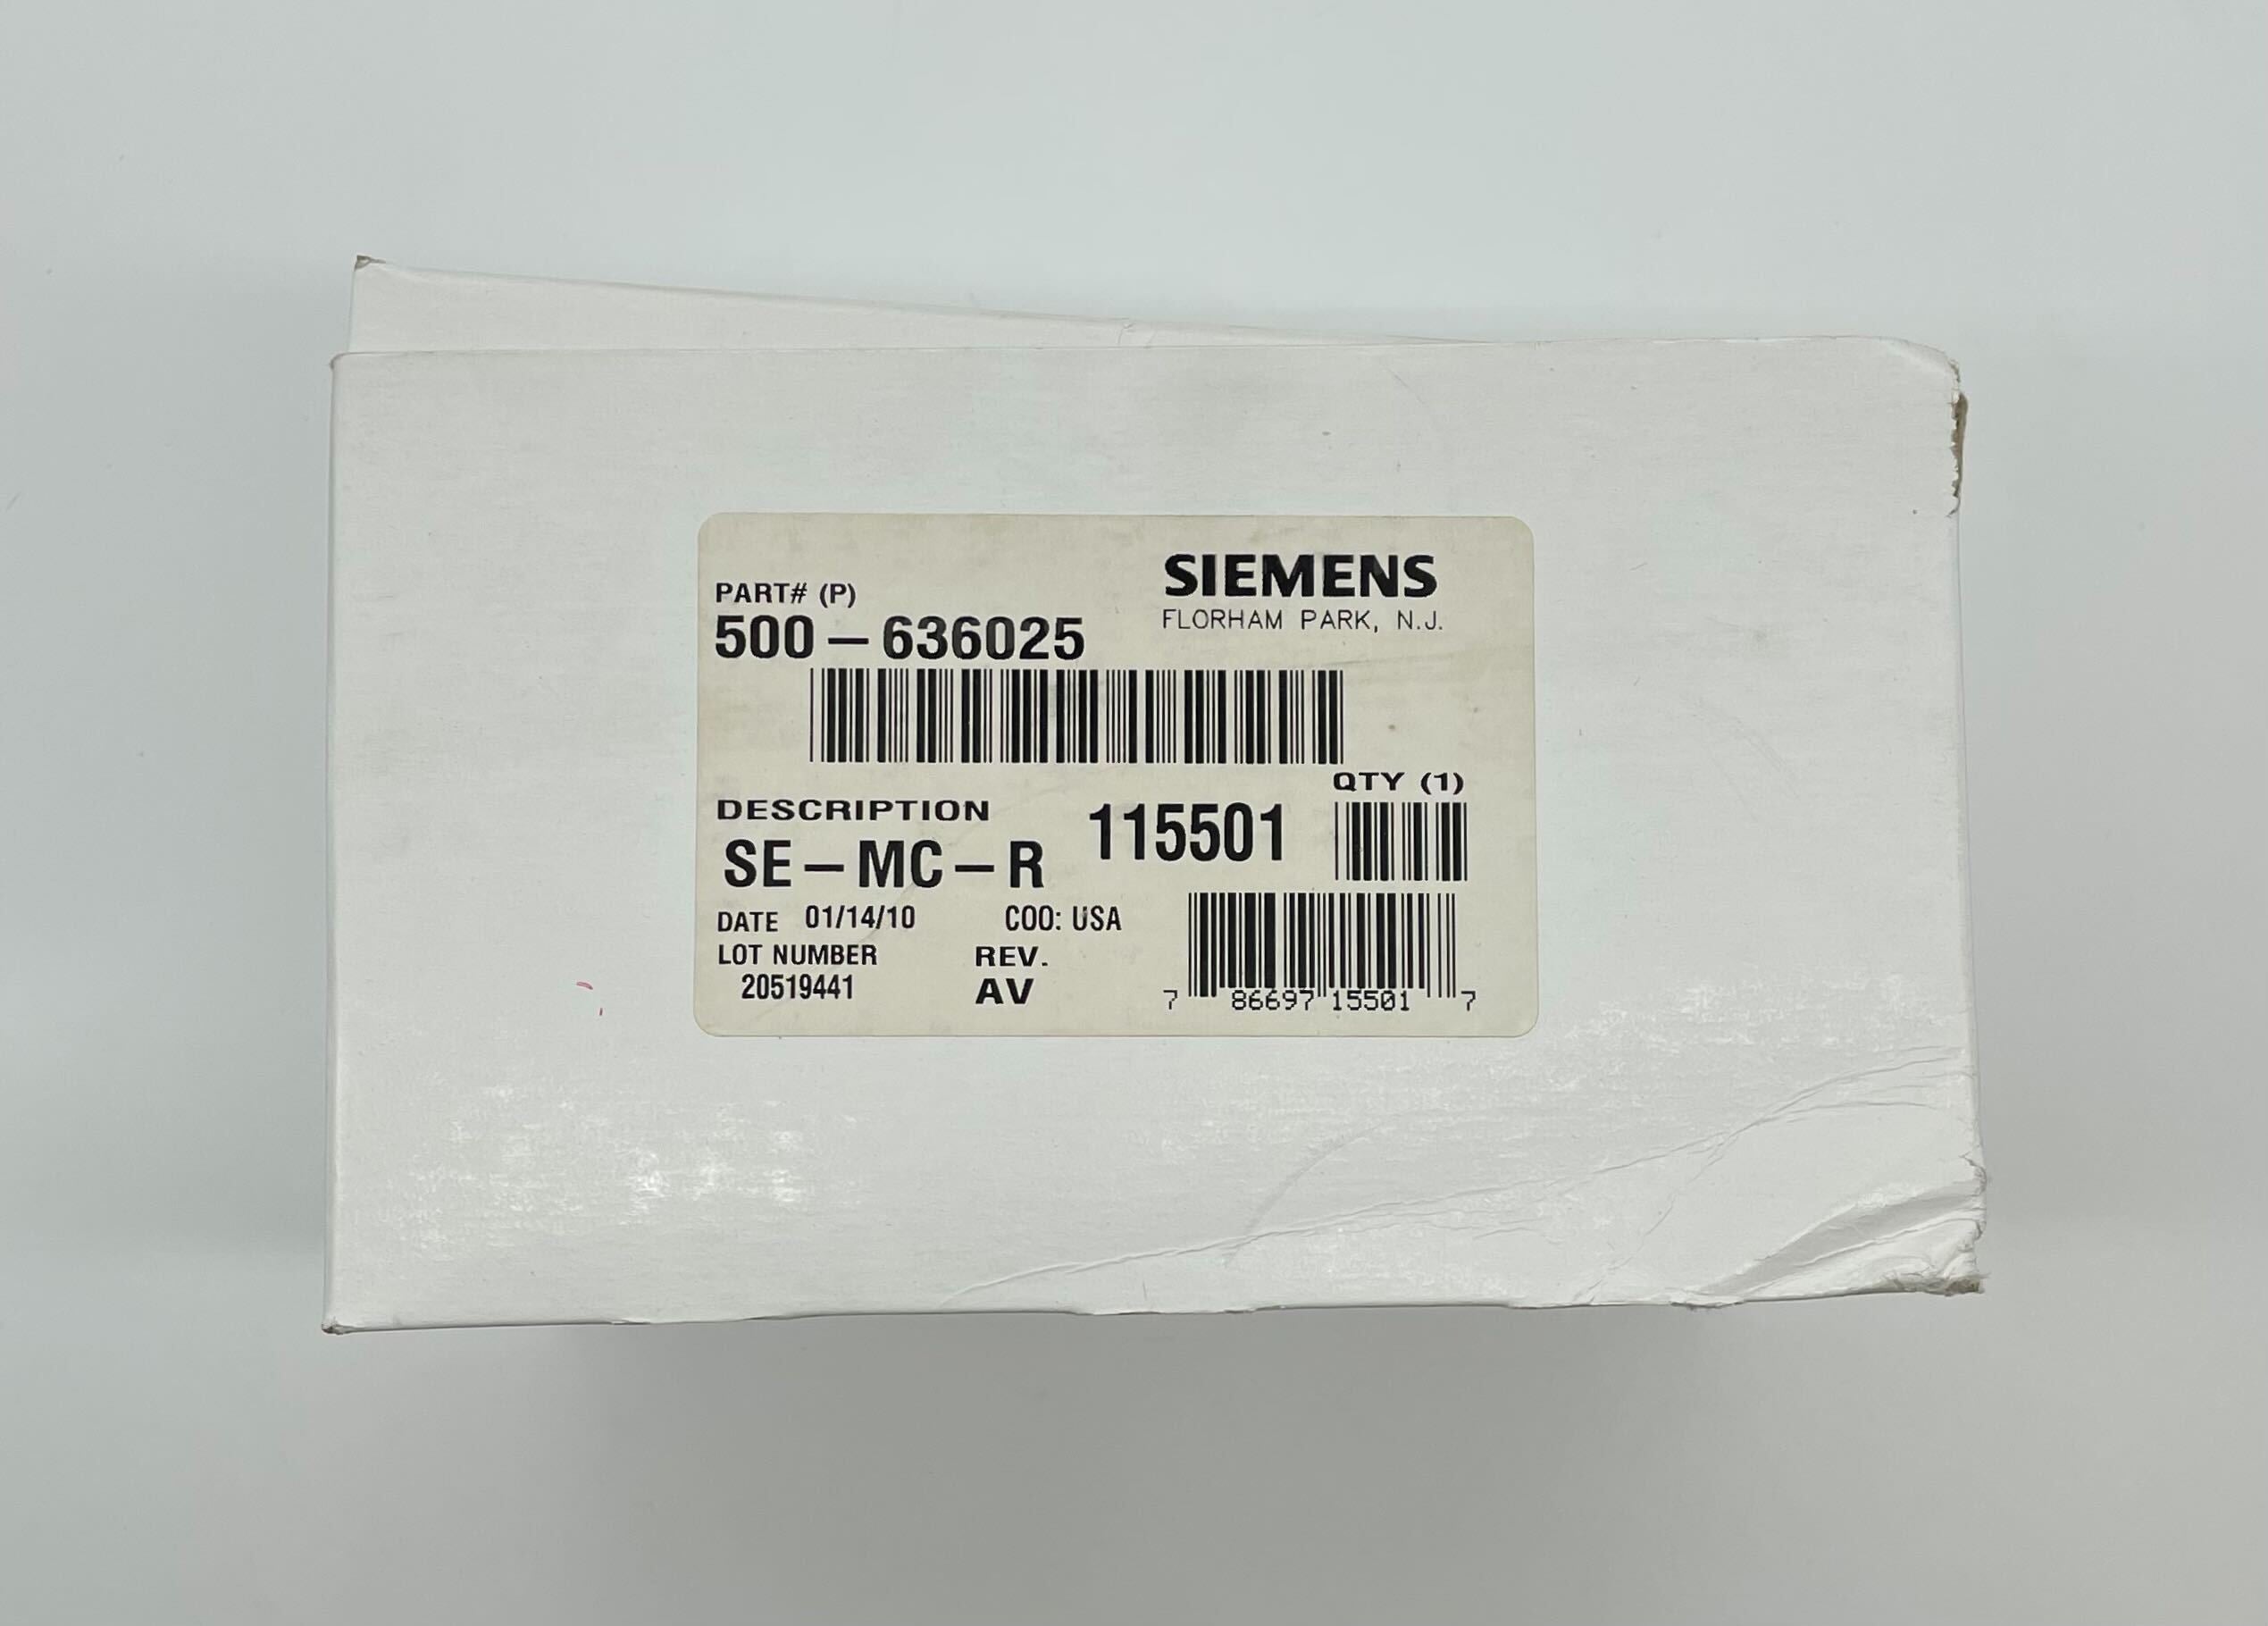 Siemens SE-MC-R